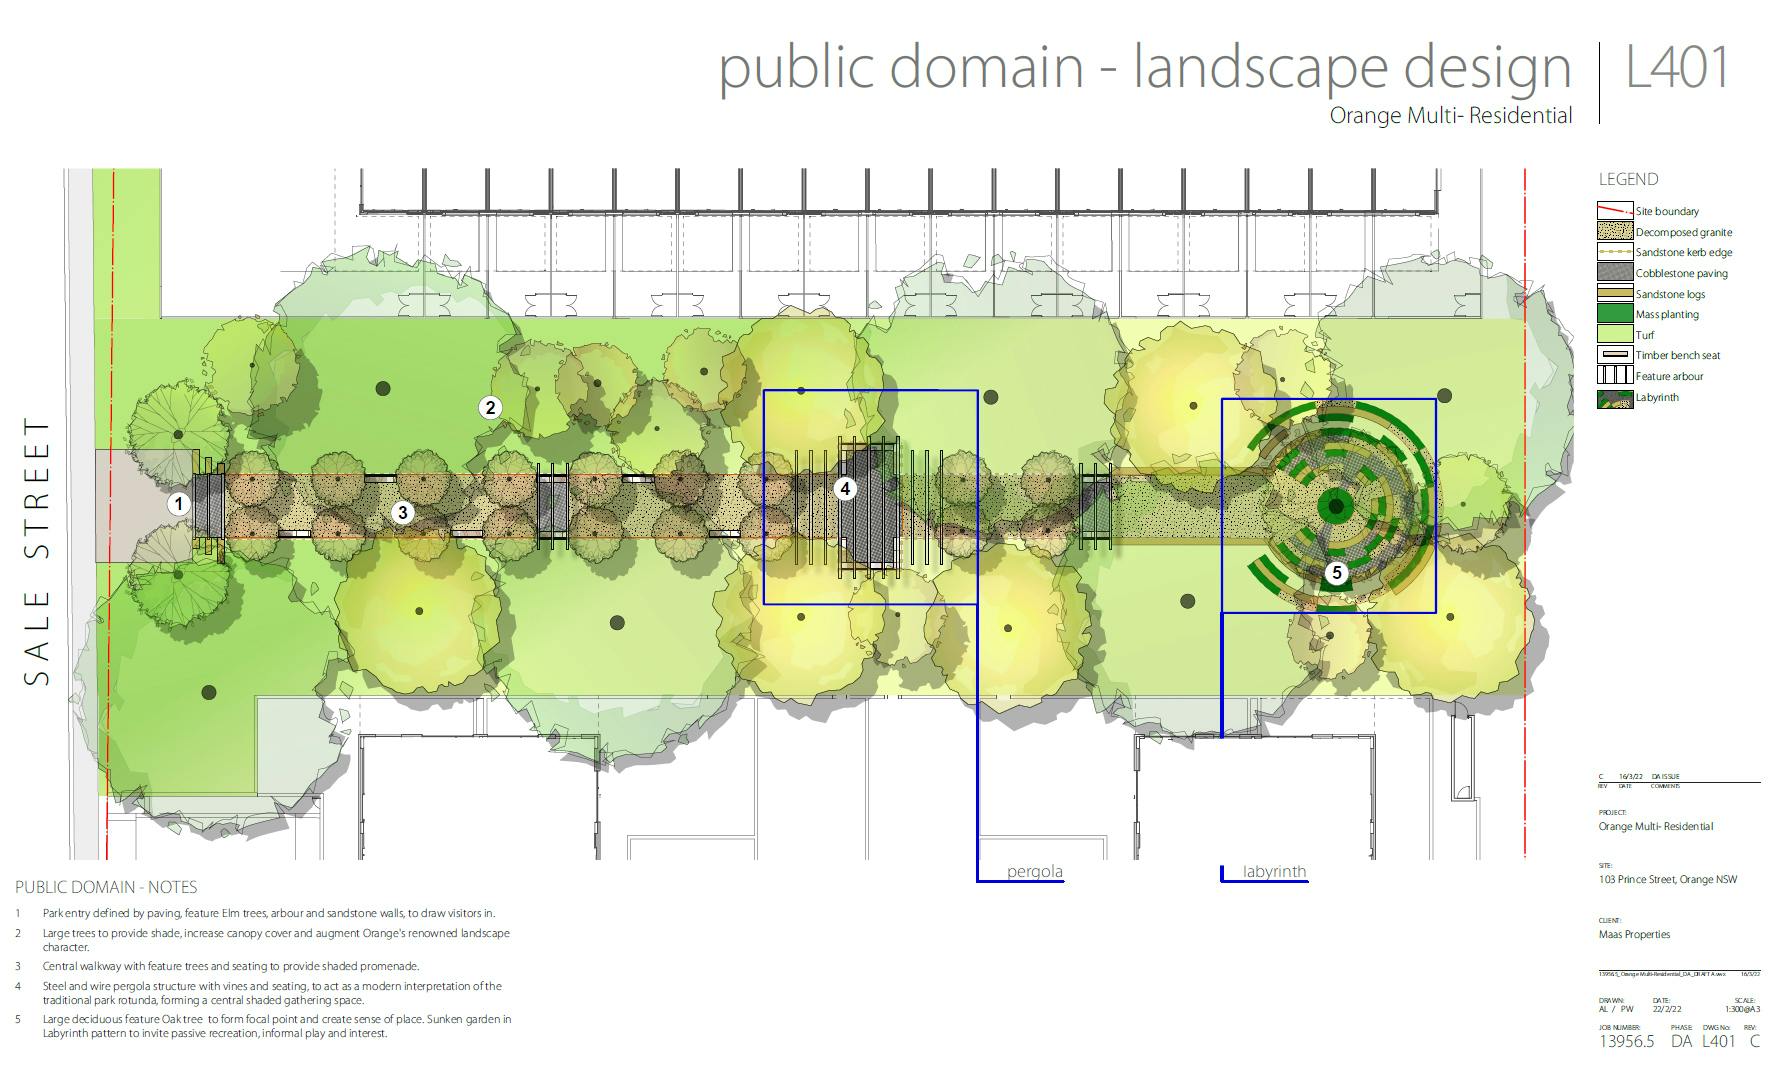 103 Prince St open space landscape design